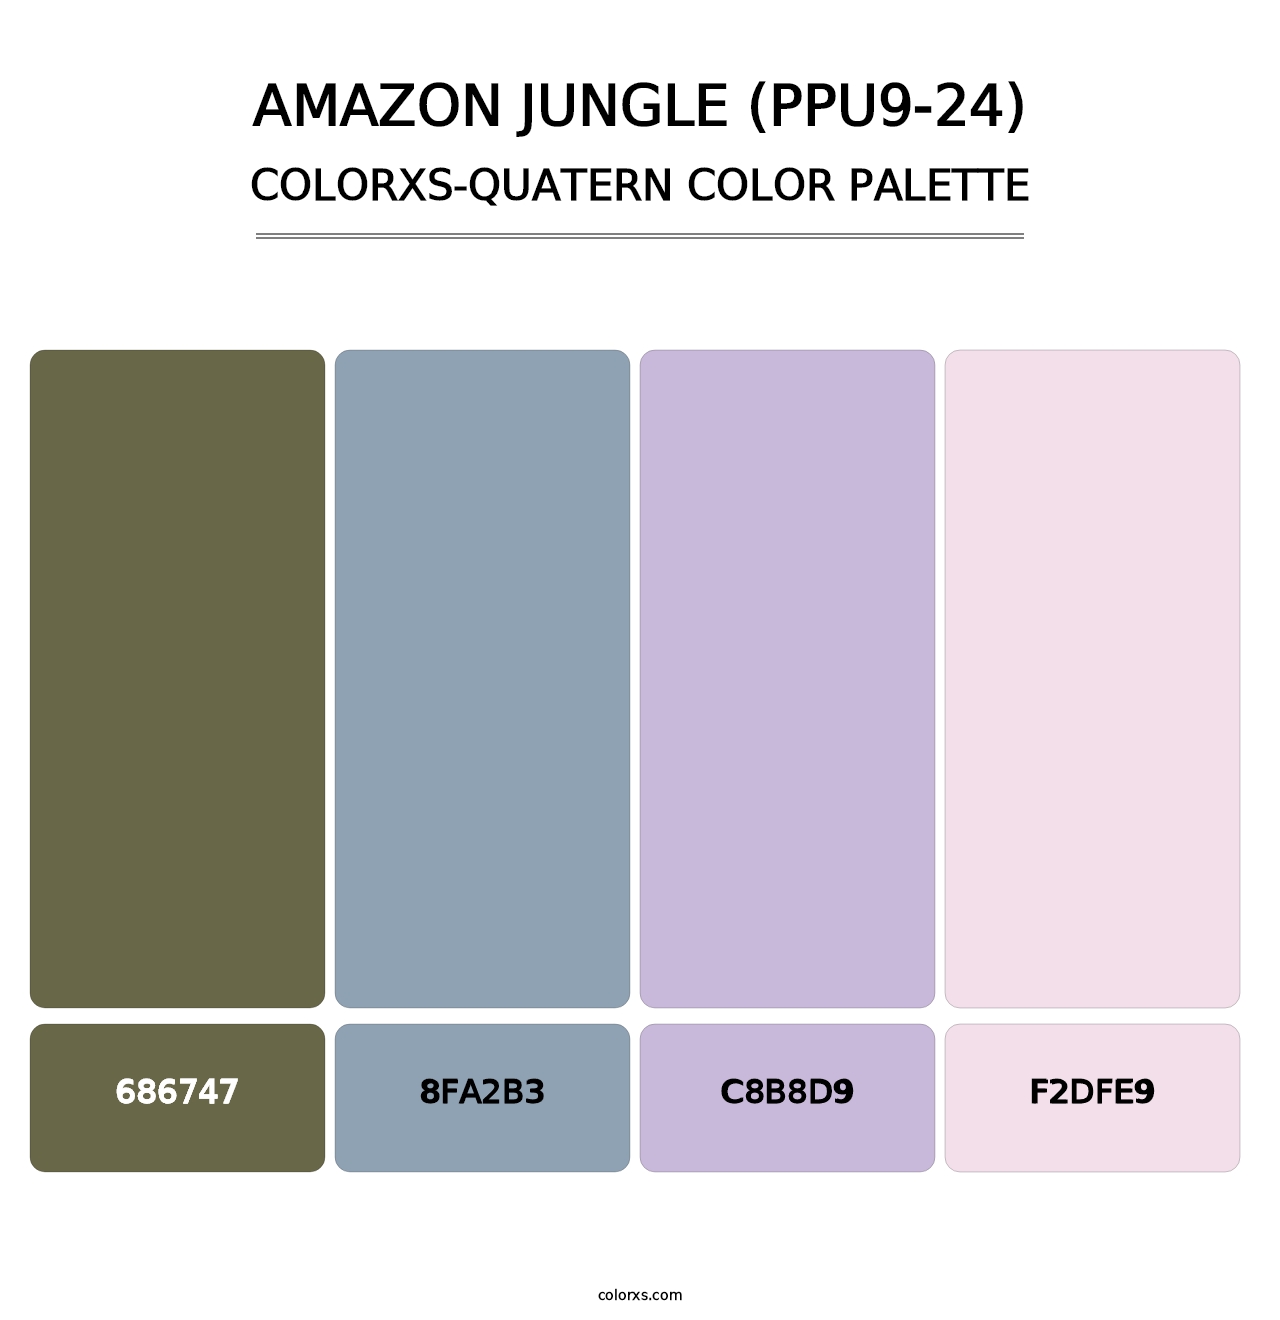 Amazon Jungle (PPU9-24) - Colorxs Quatern Palette